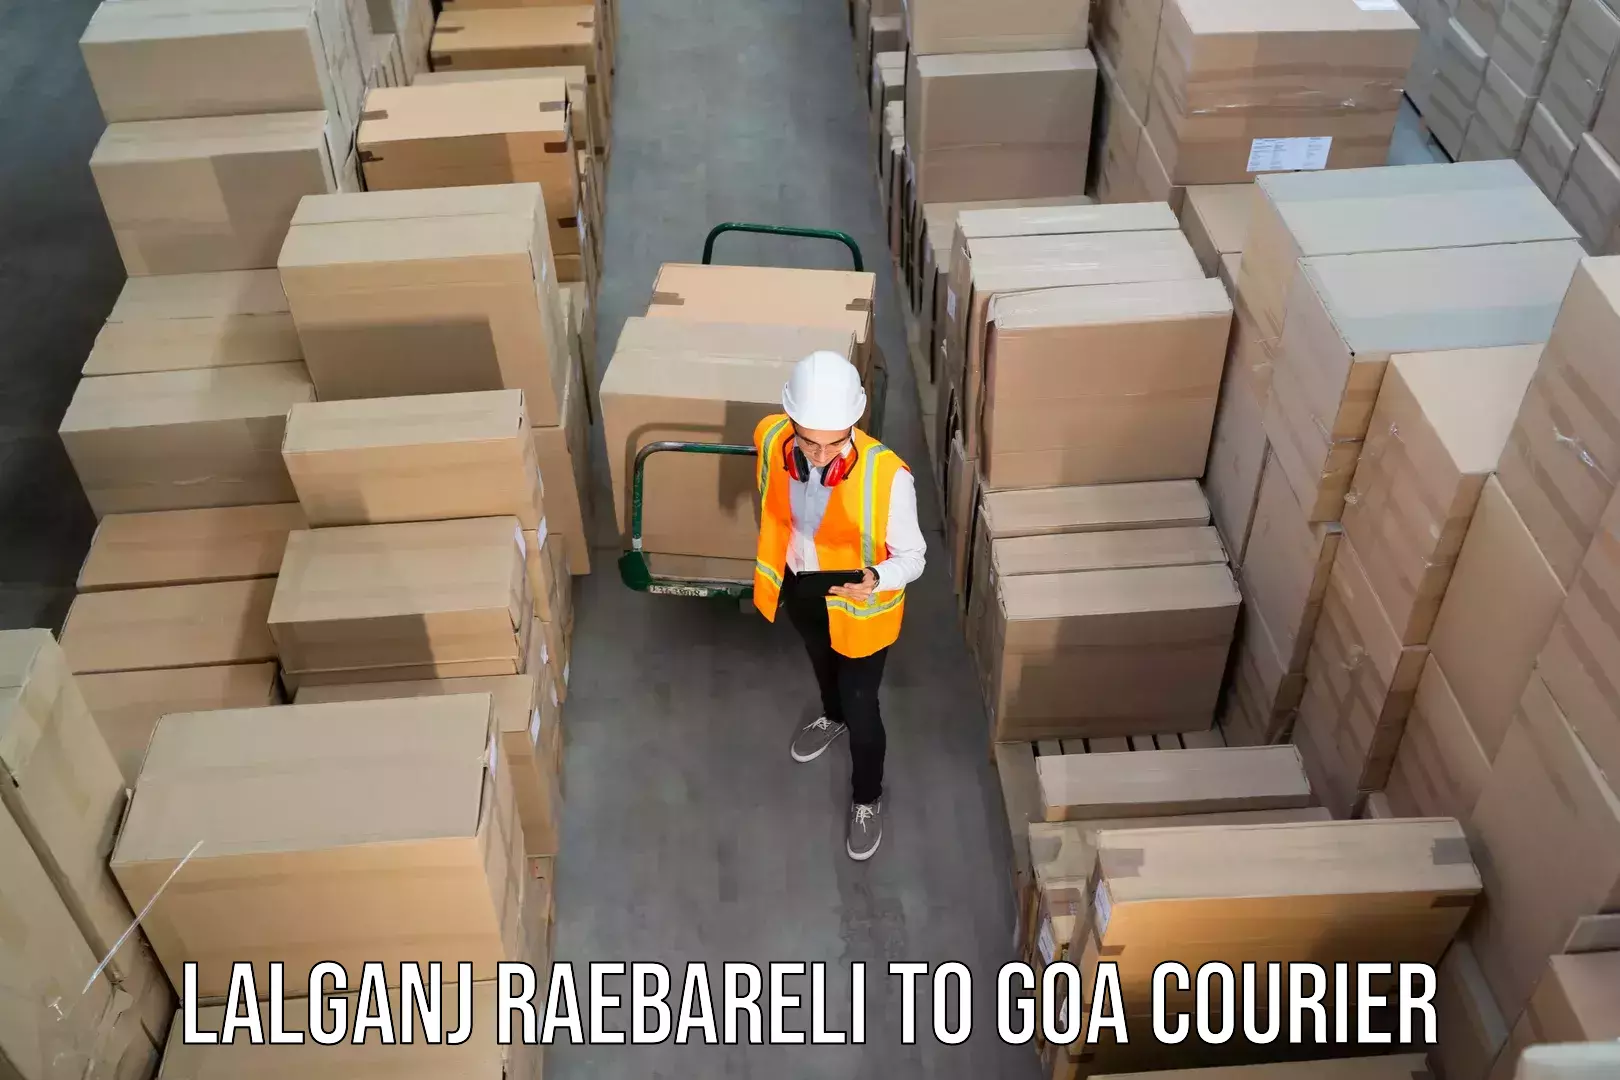 Reliable courier service Lalganj Raebareli to Ponda